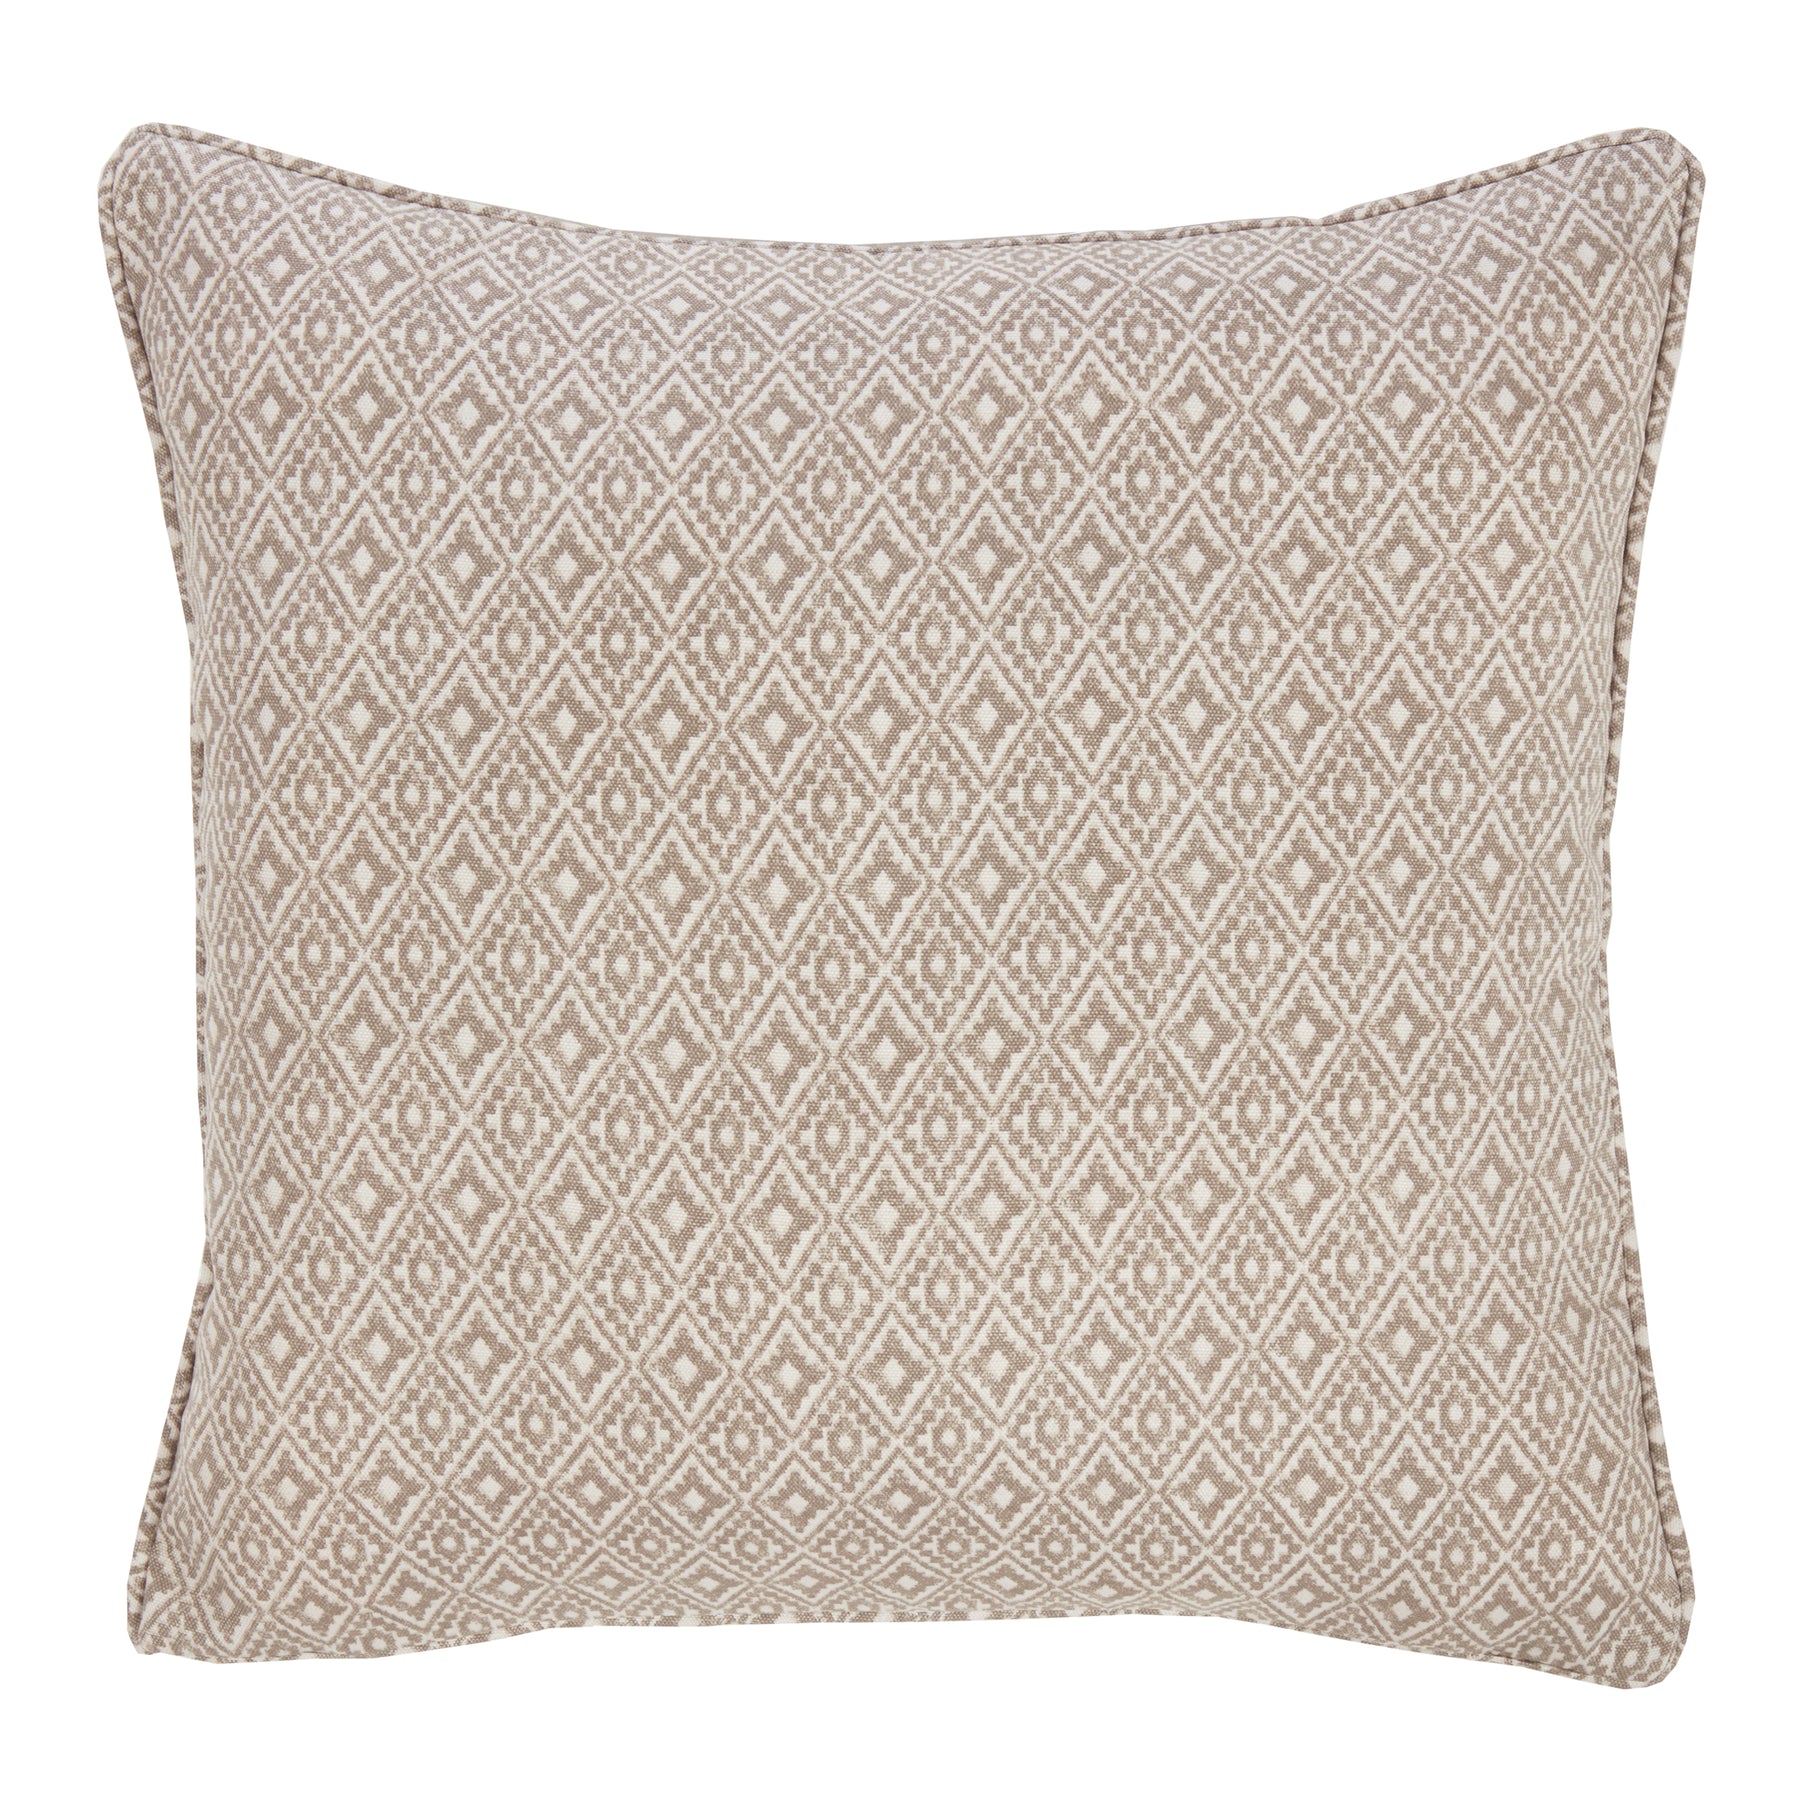 Aztec Filled Cushion 18x18 Linen